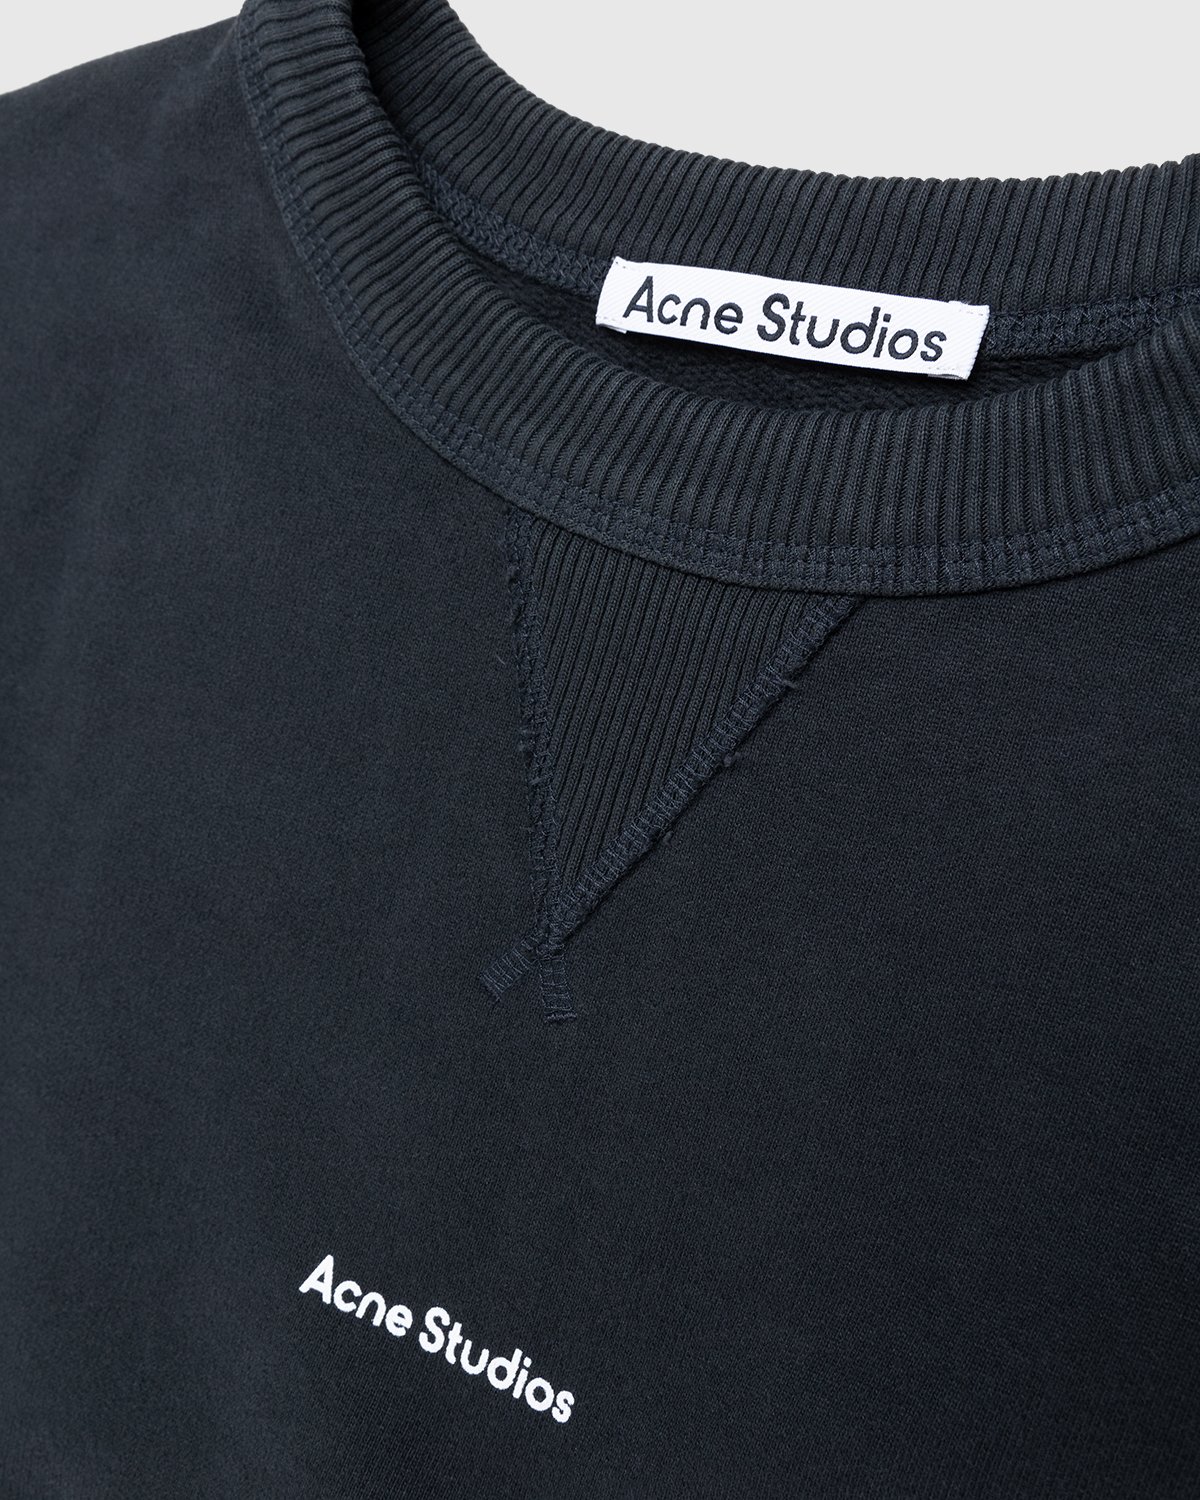 Acne Studios - Organic Cotton Logo Crewneck Sweatshirt Black - Clothing - Black - Image 3